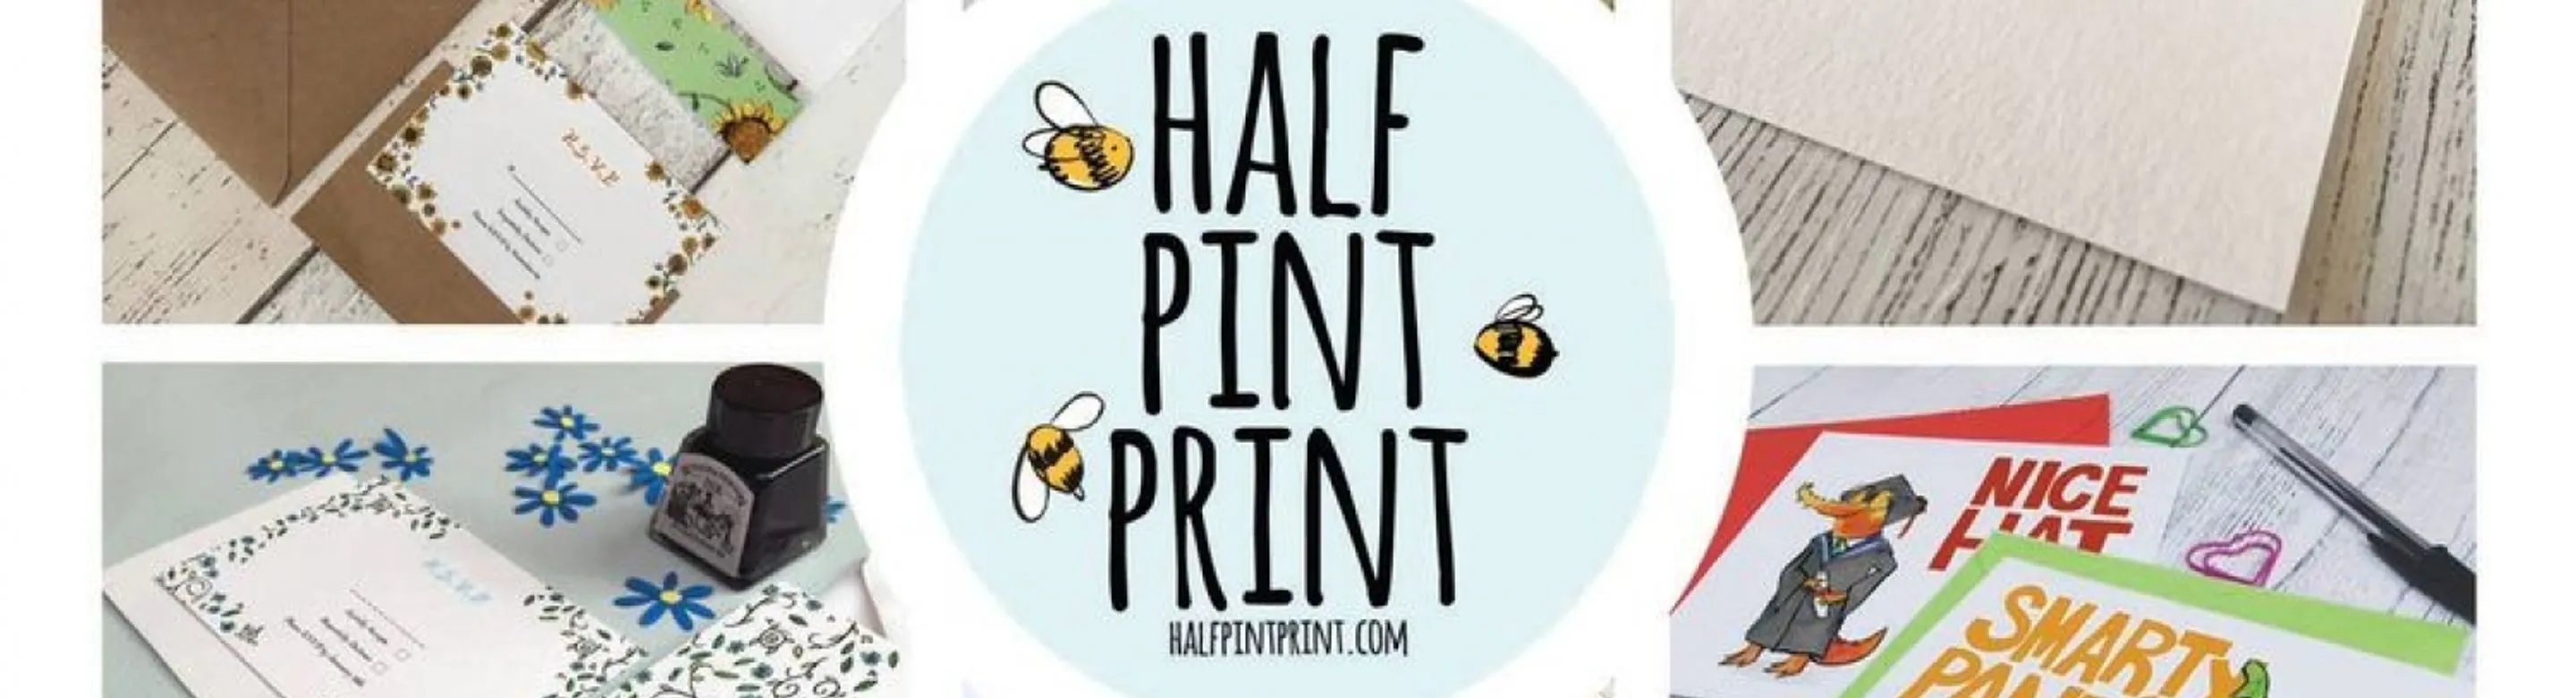 Half Pint Print